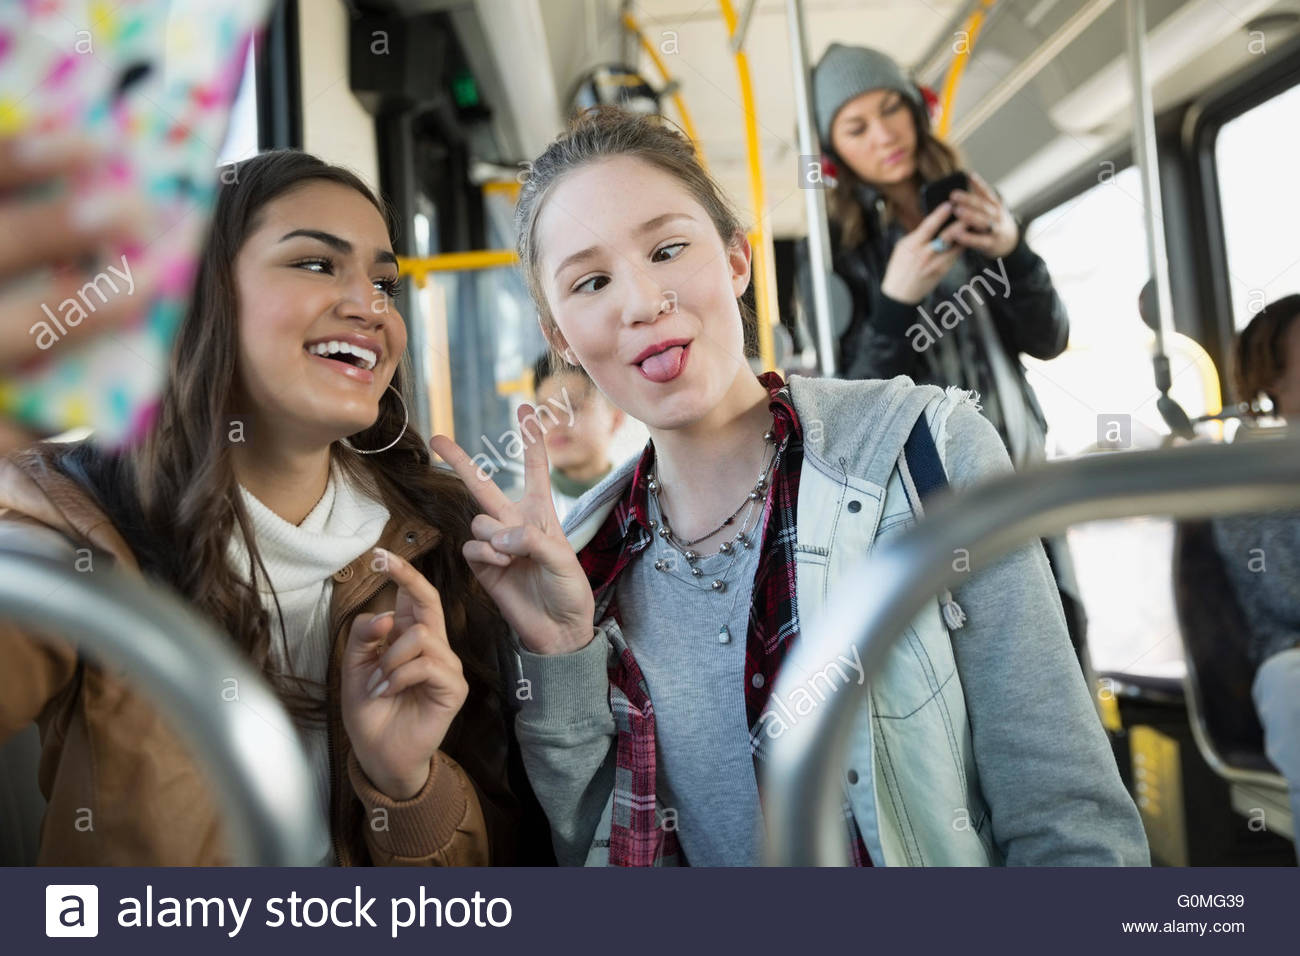 Teenage girl making a face taking selfie bus Stock Photo